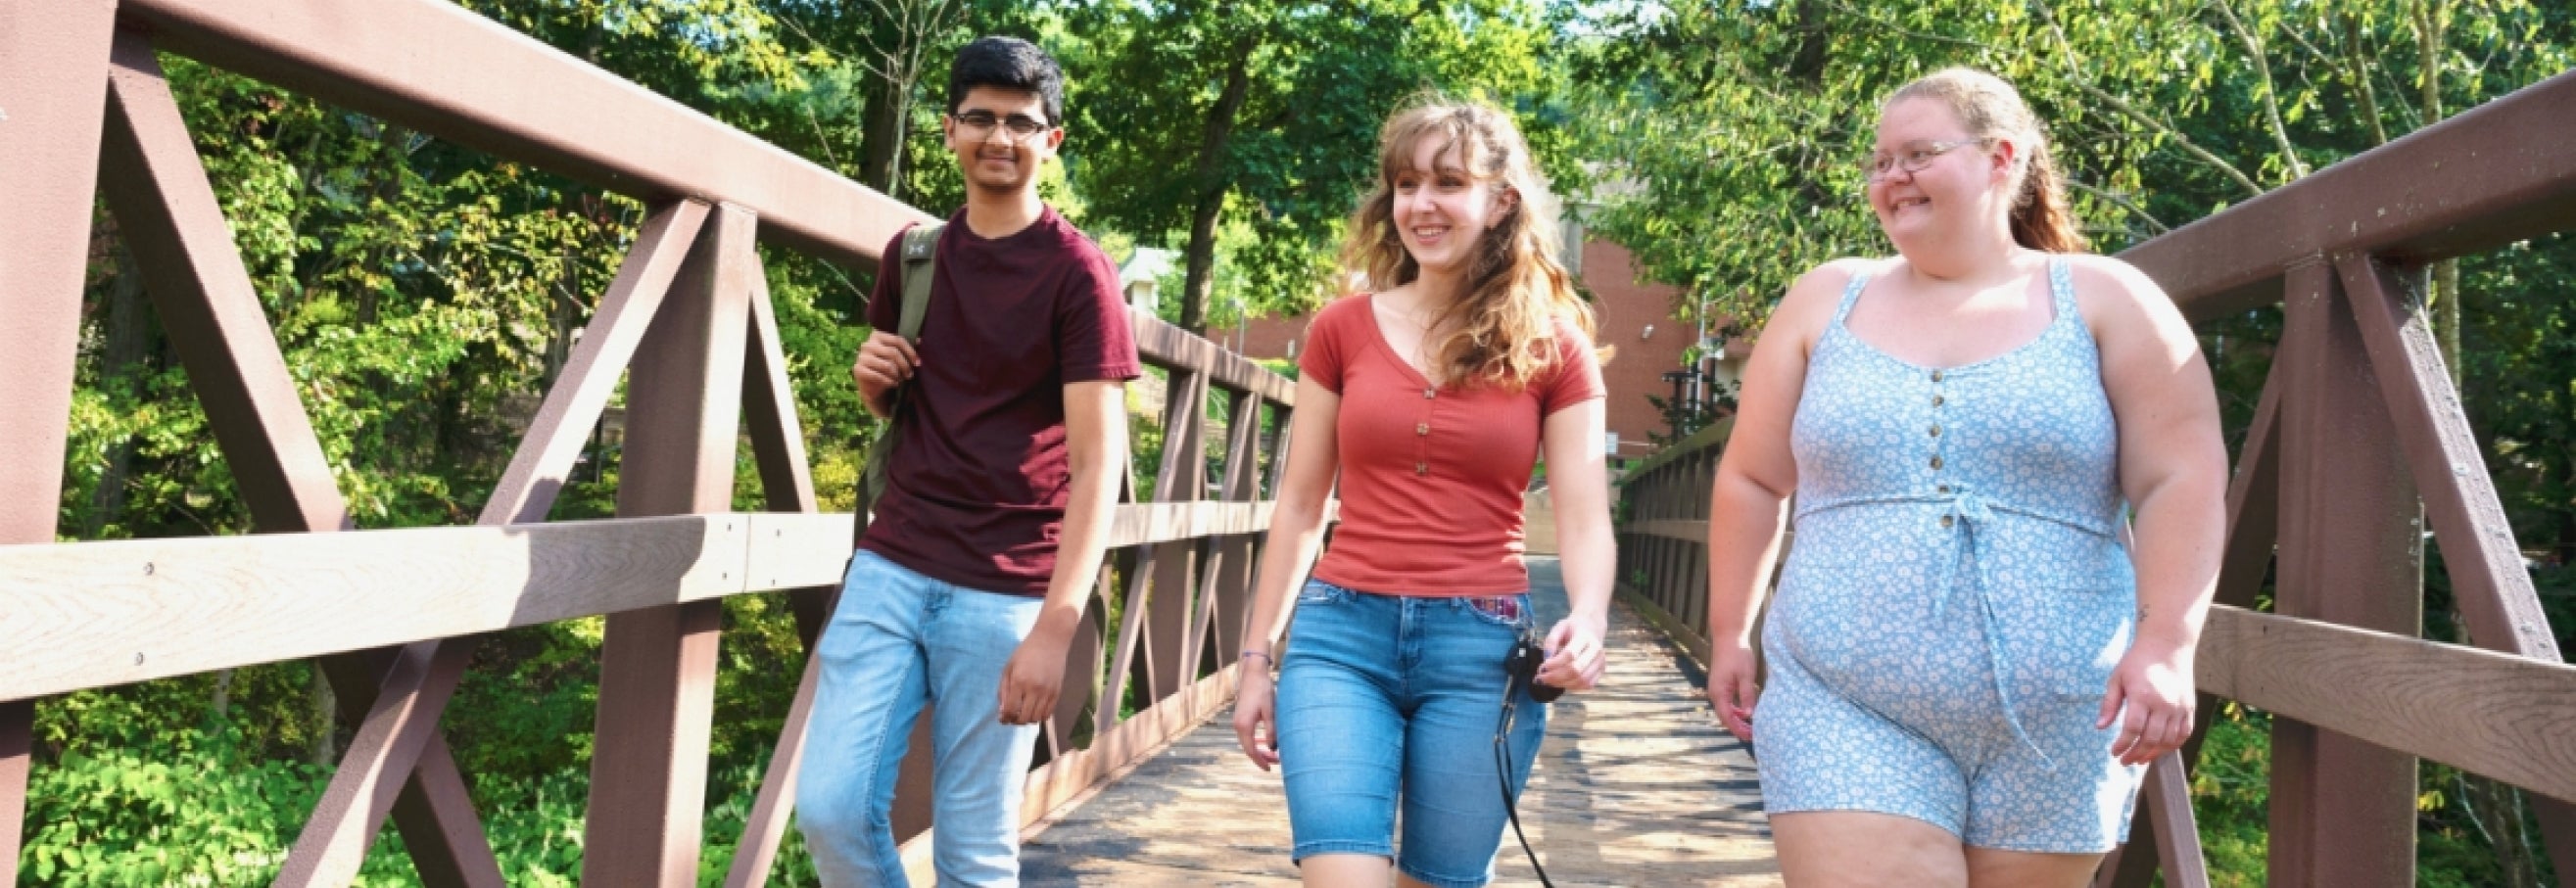 Three students walking across campus footbridge